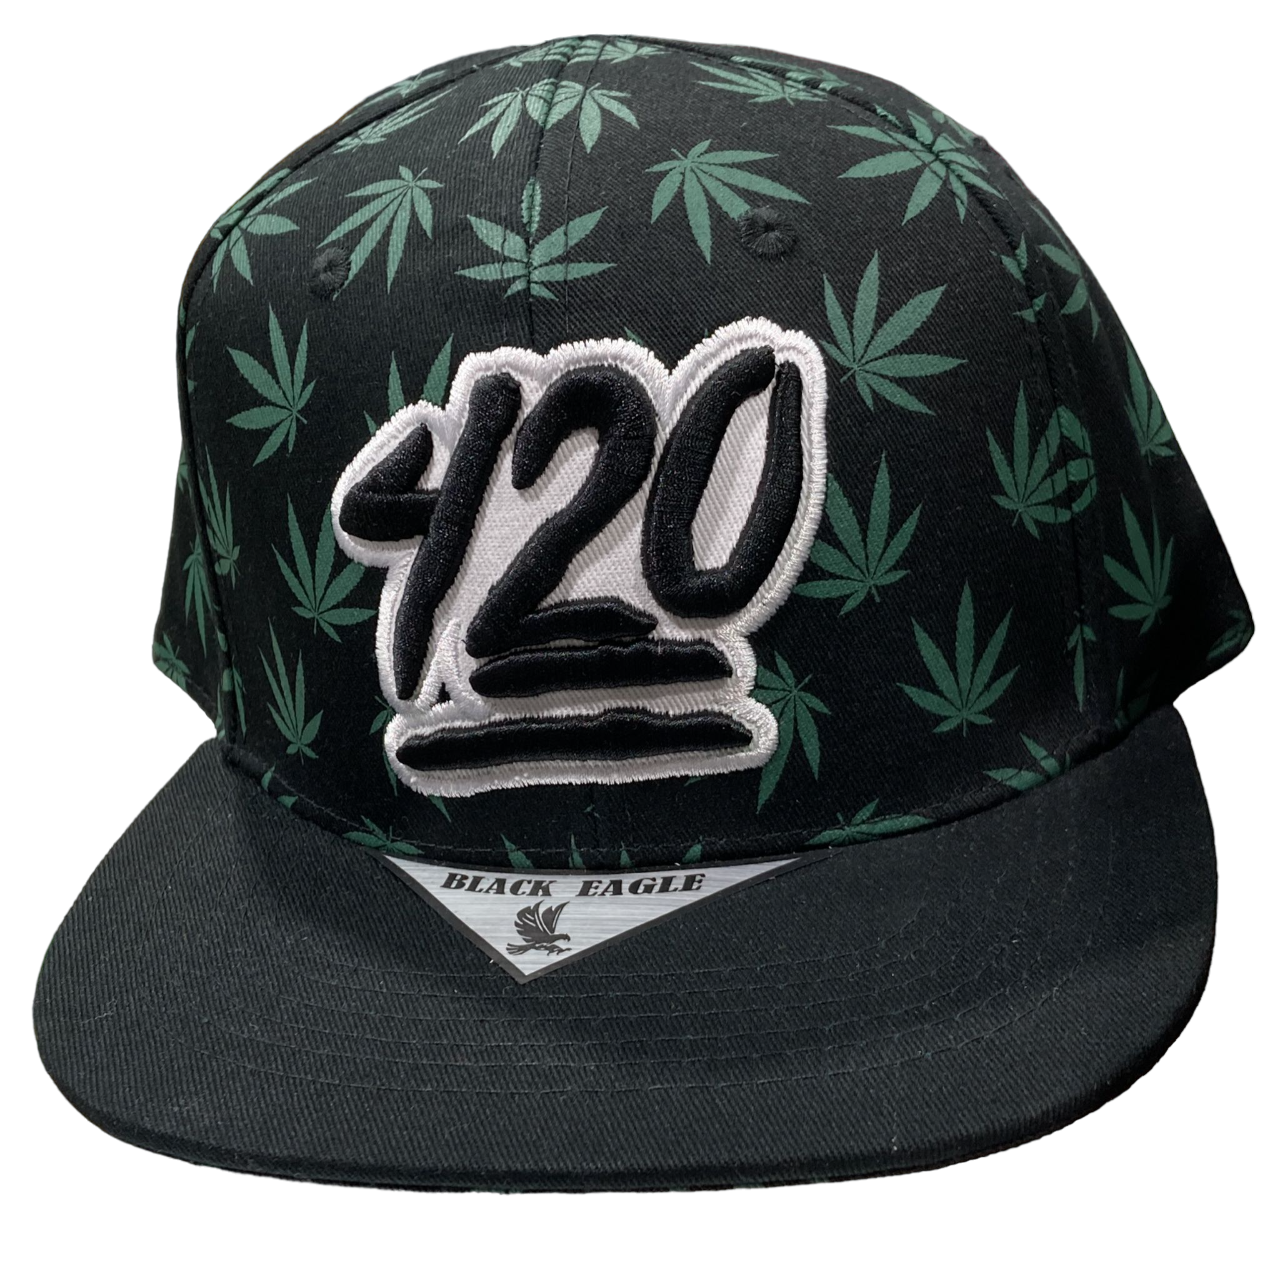 Adjustable Baseball Hat - 420 Marijuana Printed (Black/Green) - MK Distro